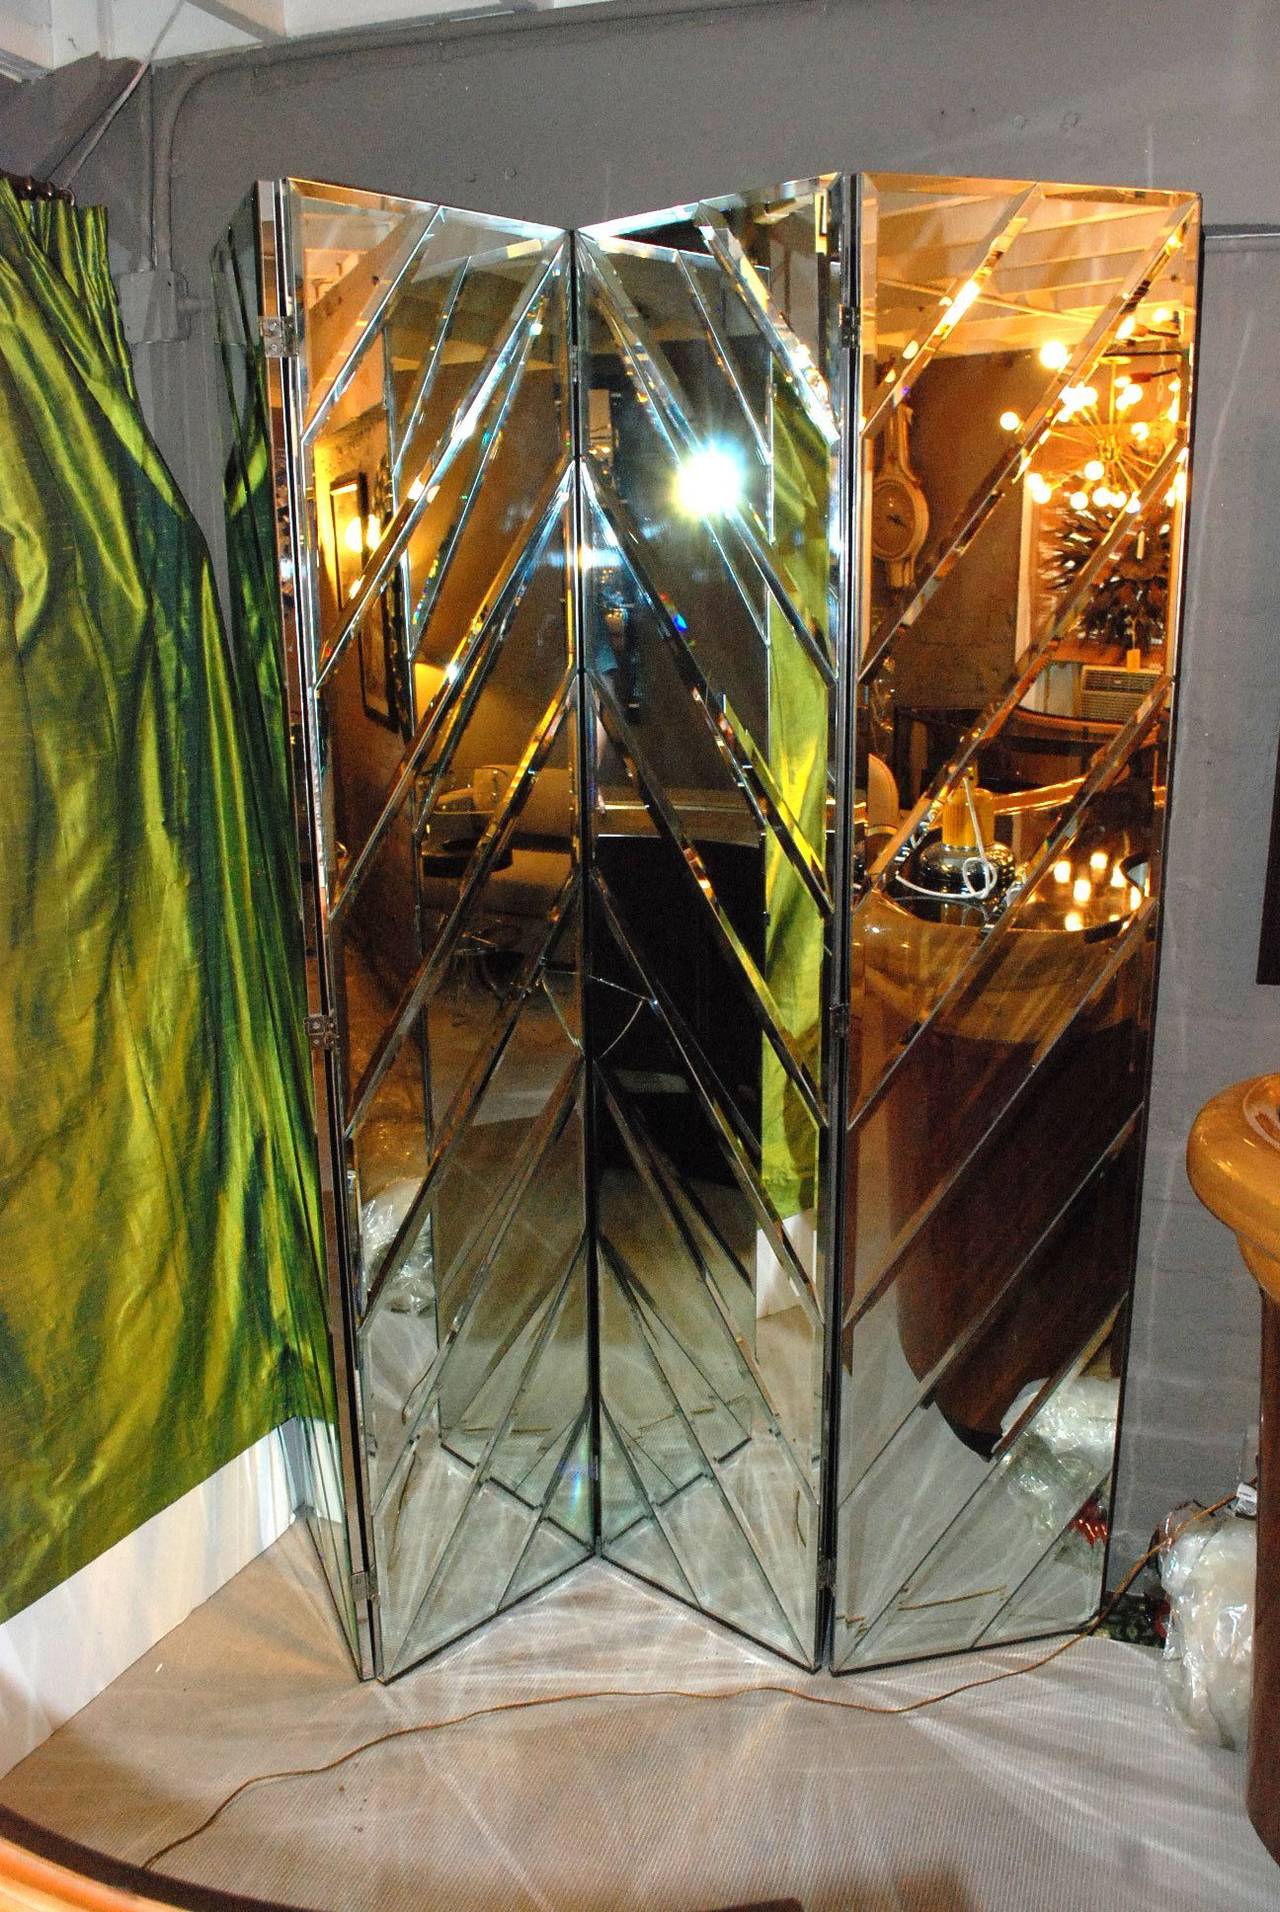 Elegant 1970s mirrored beveled edge folding screen.
Dimension of each panel is W 18